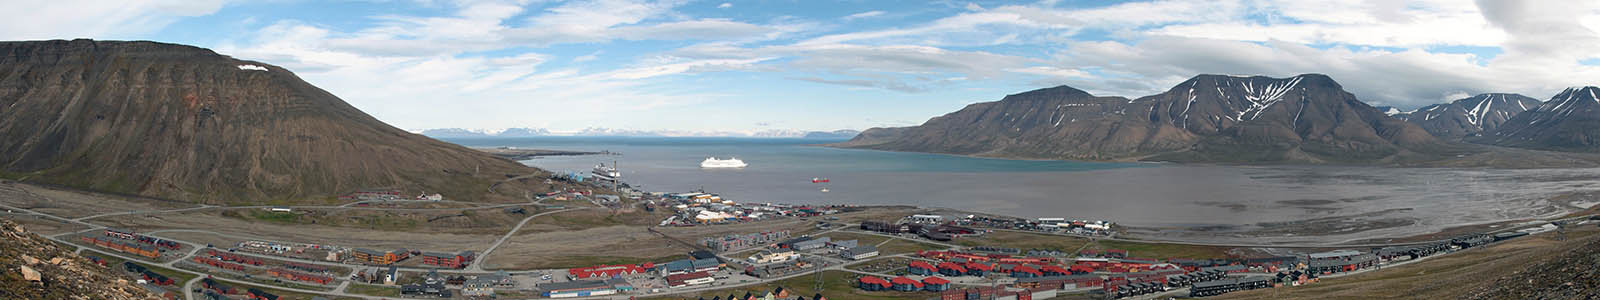 Longyearbyen, de hoofdstad van Spitsbergen